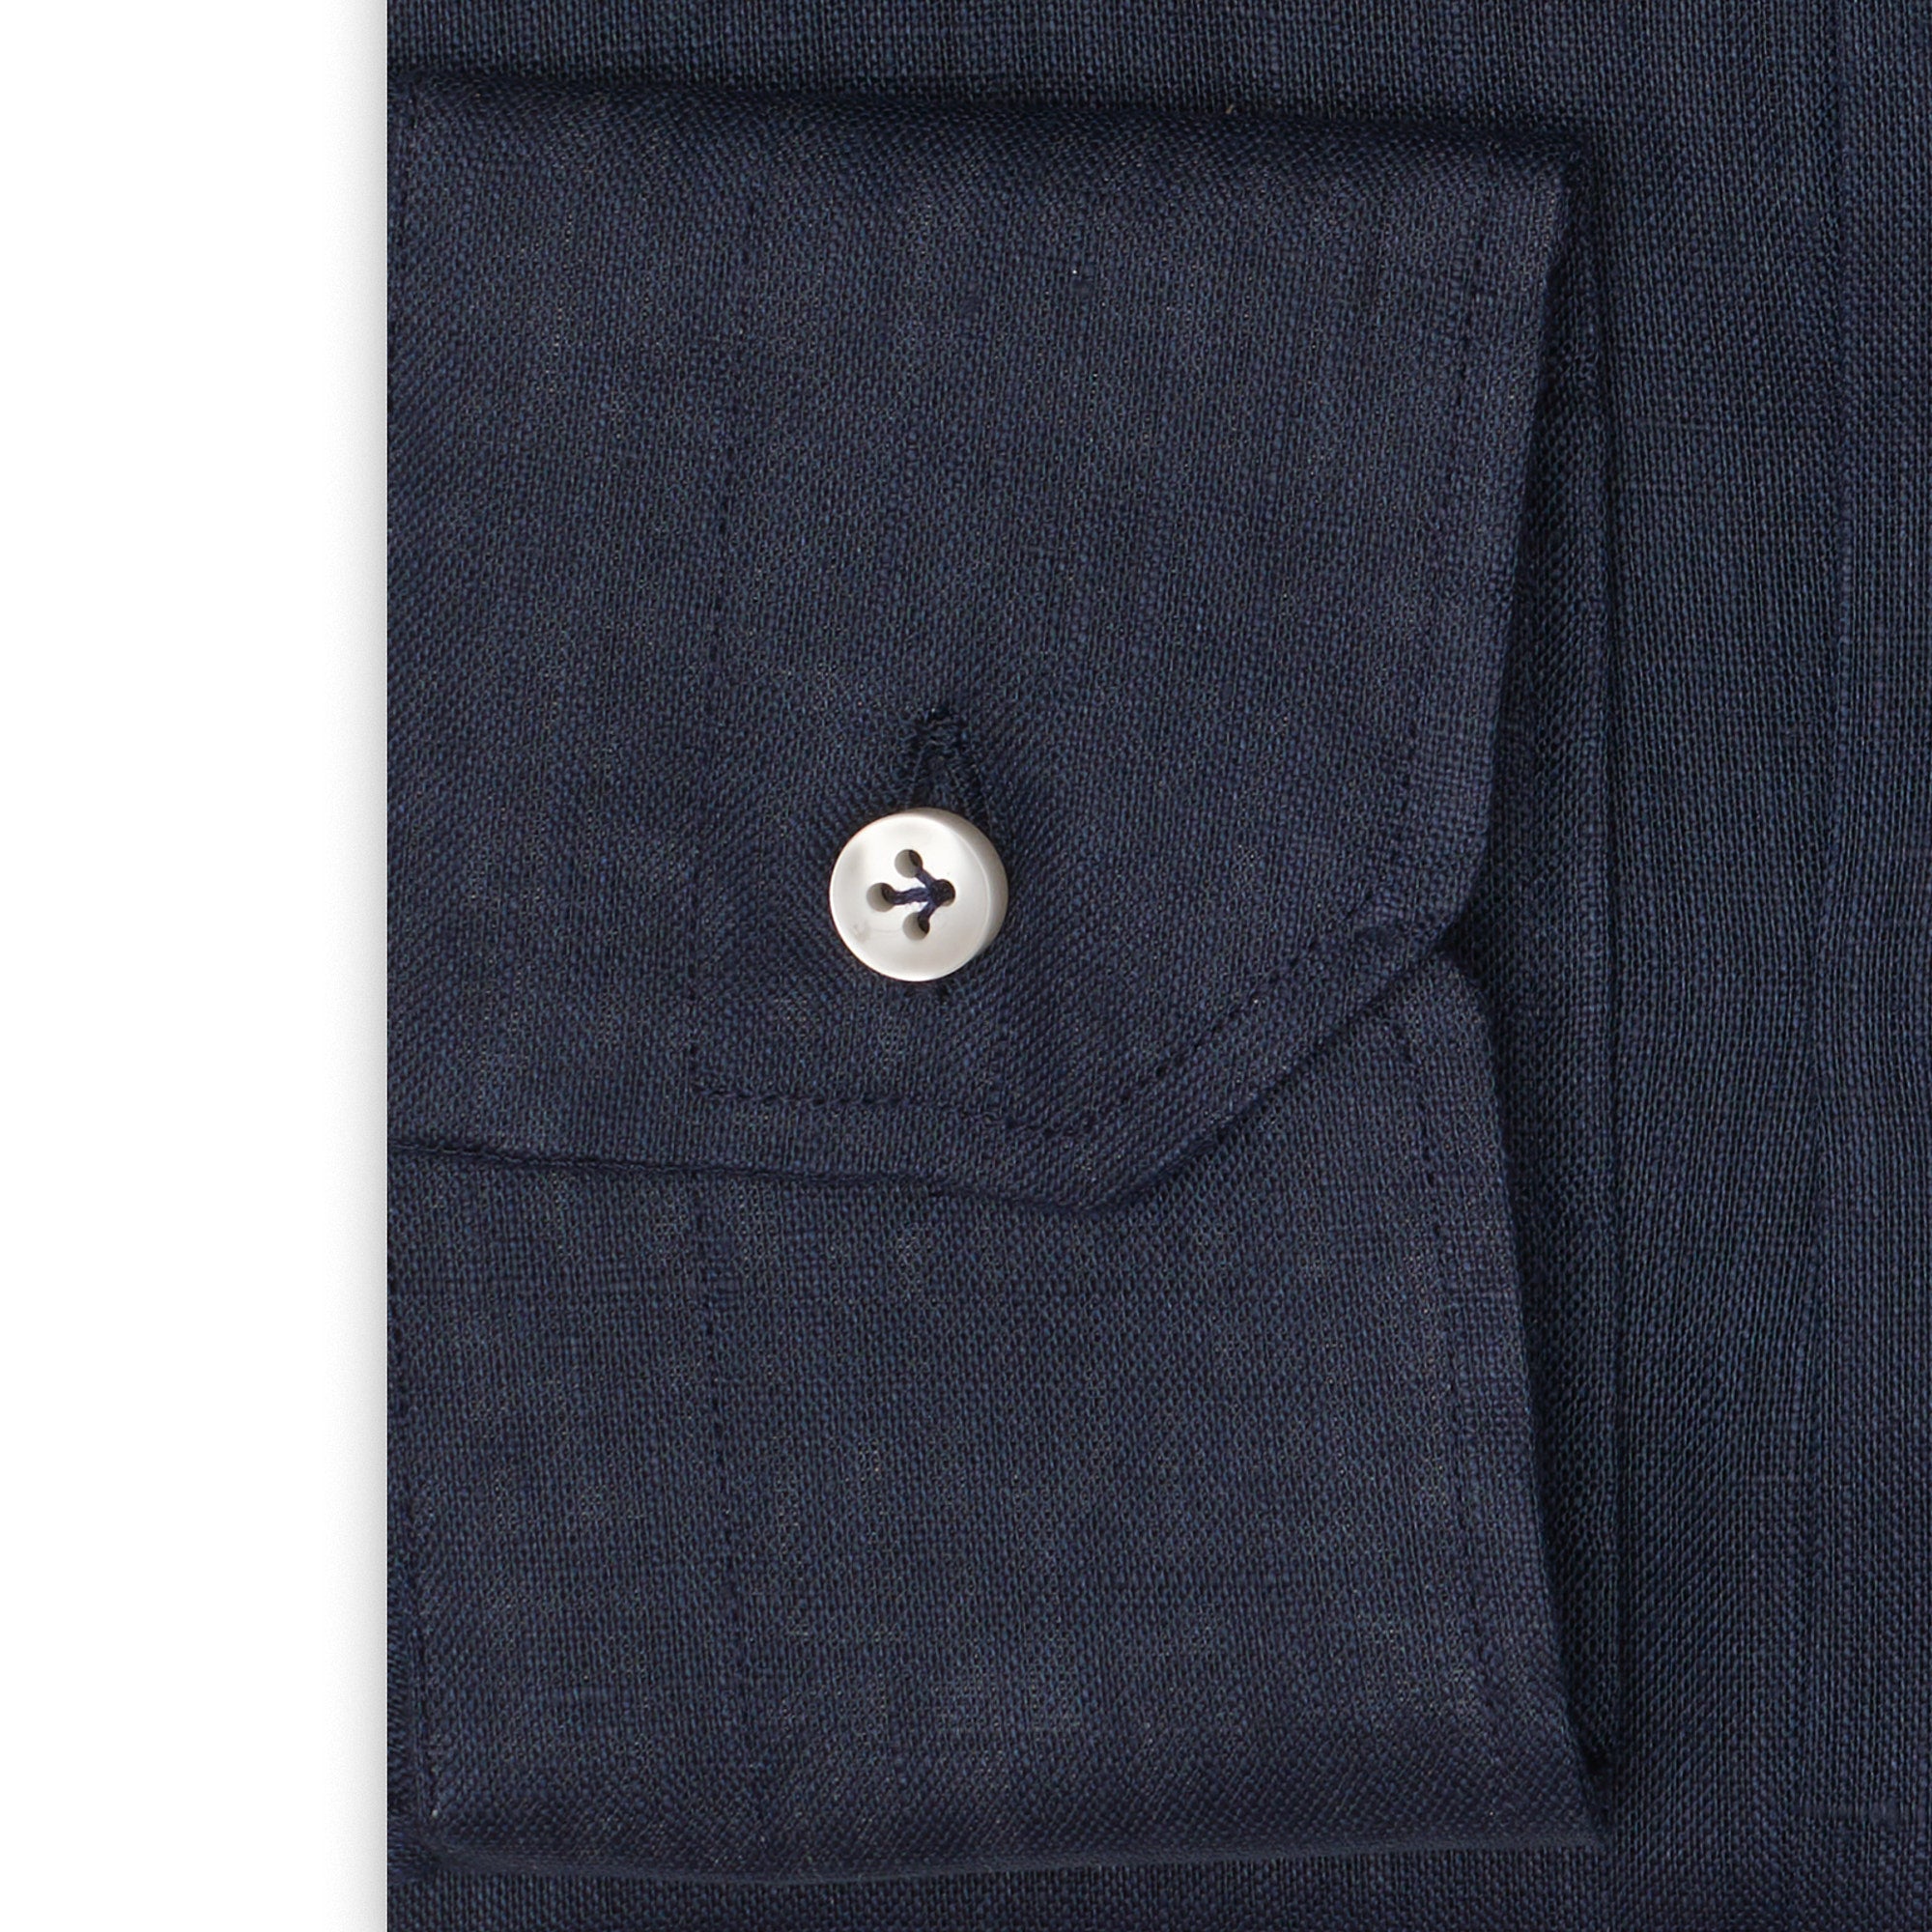 SARTORIO Napoli by KITON Midnight Blue Linen Spread Collar Shirt Slim Fit NEW